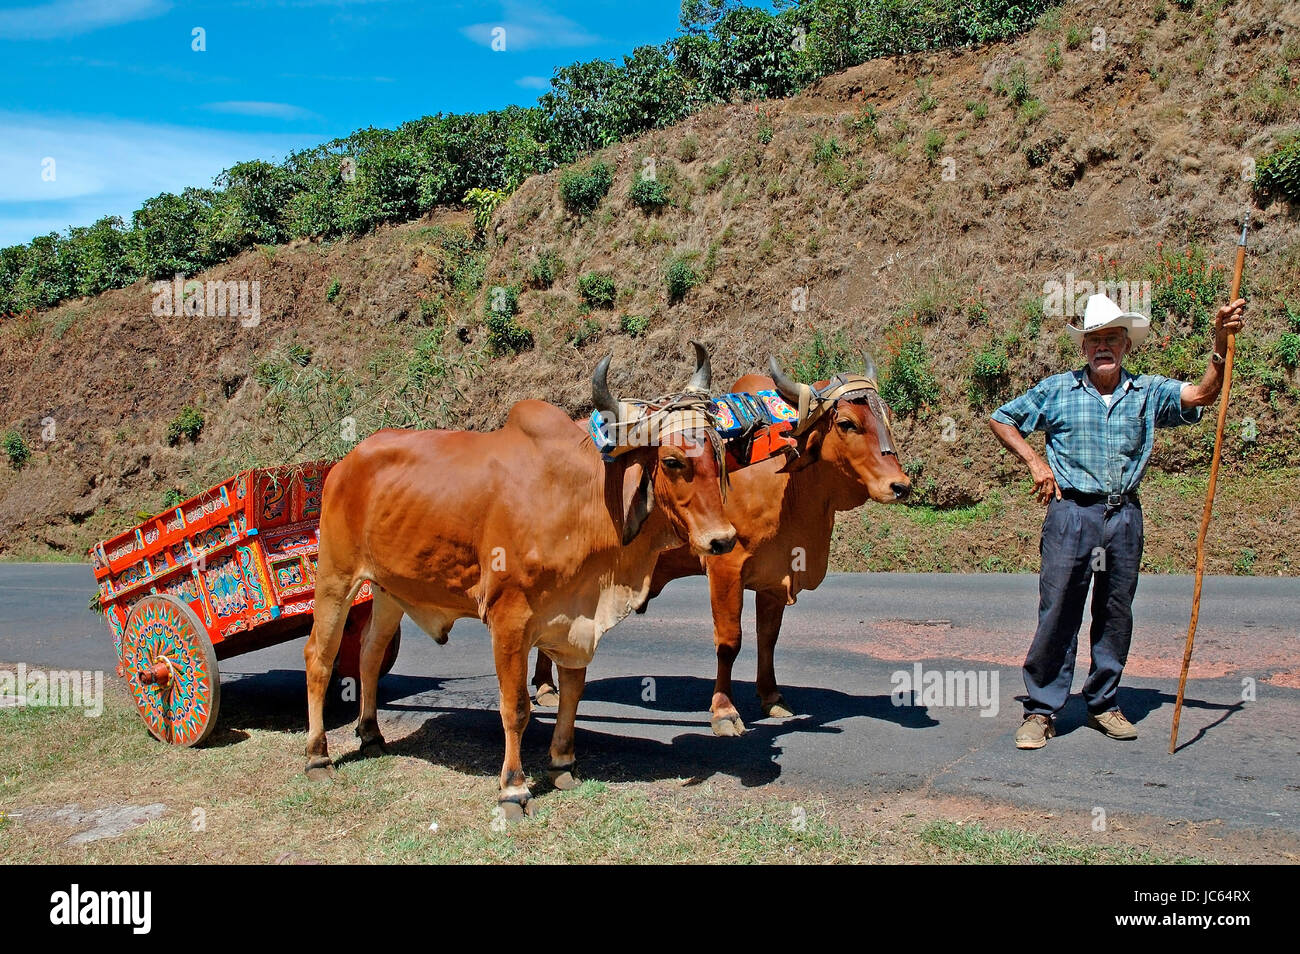 Costa Rica, Nähe von Alajuela, Mann mit bemalten die Ochsenkarren, Naehe von Alajuela, Mann Mit Bemaltem Ochsenkarren Stockfoto